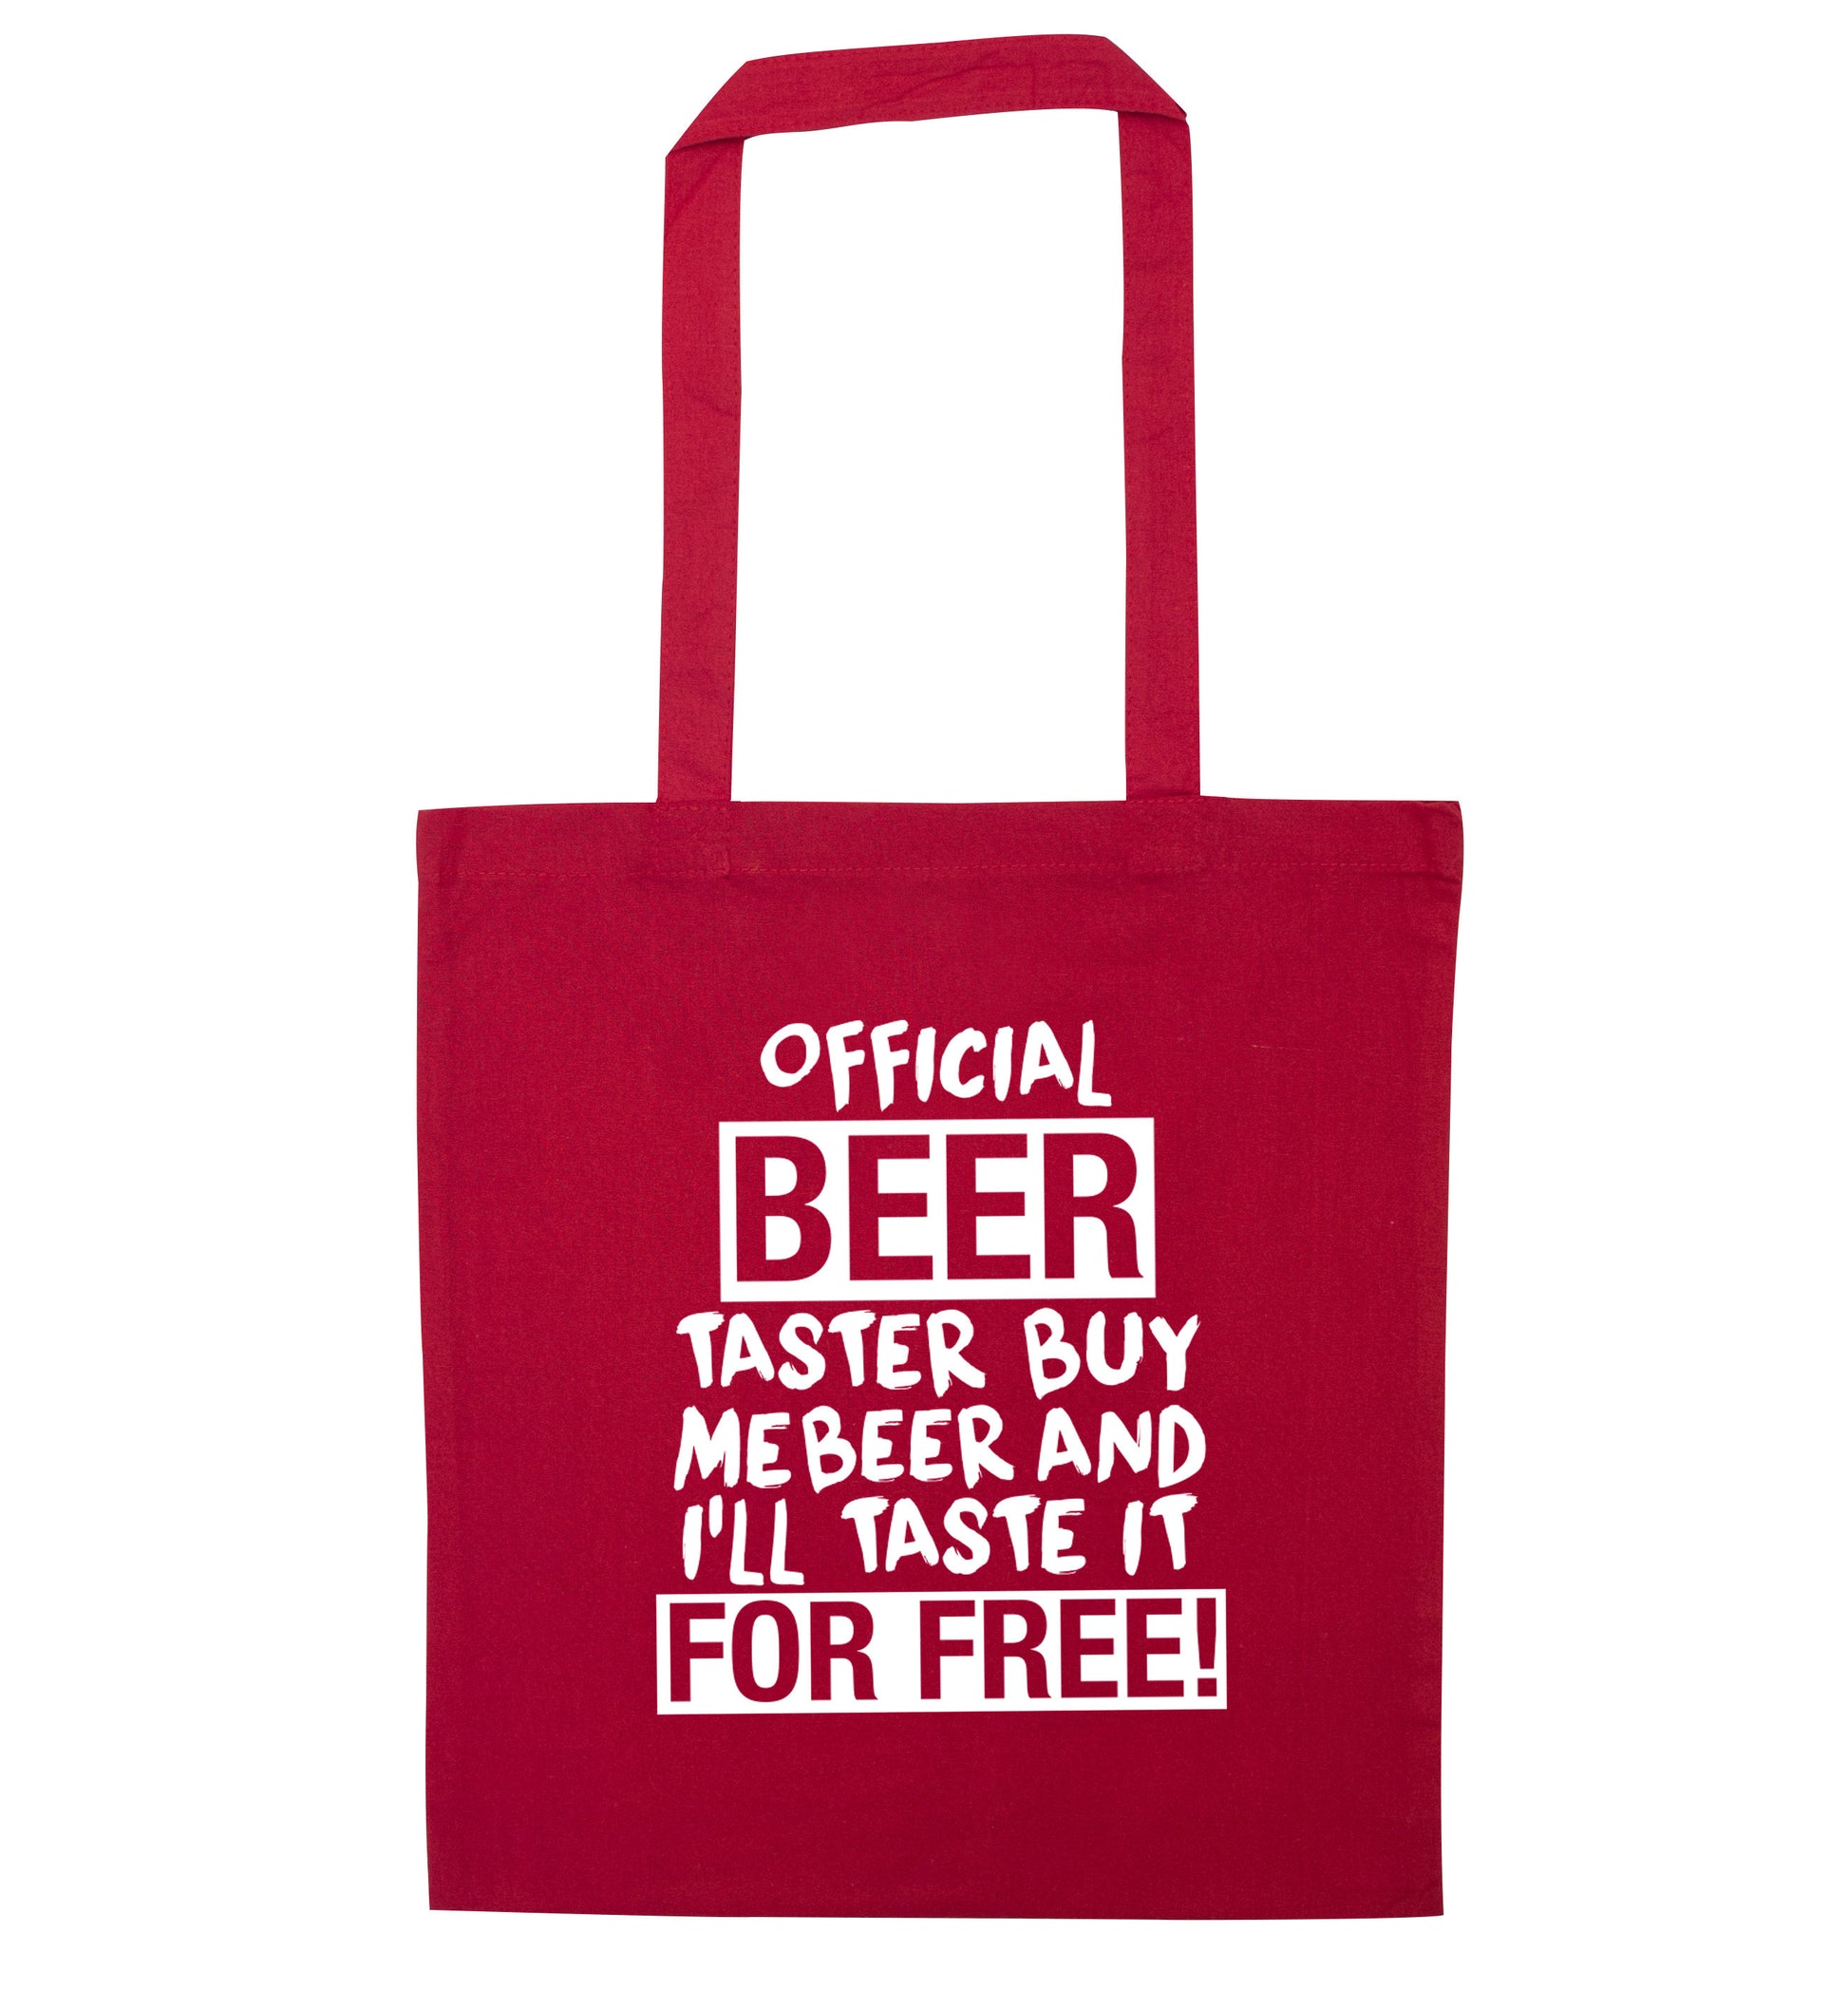 Official beer taster buy me beer and I'll taste it for free! red tote bag